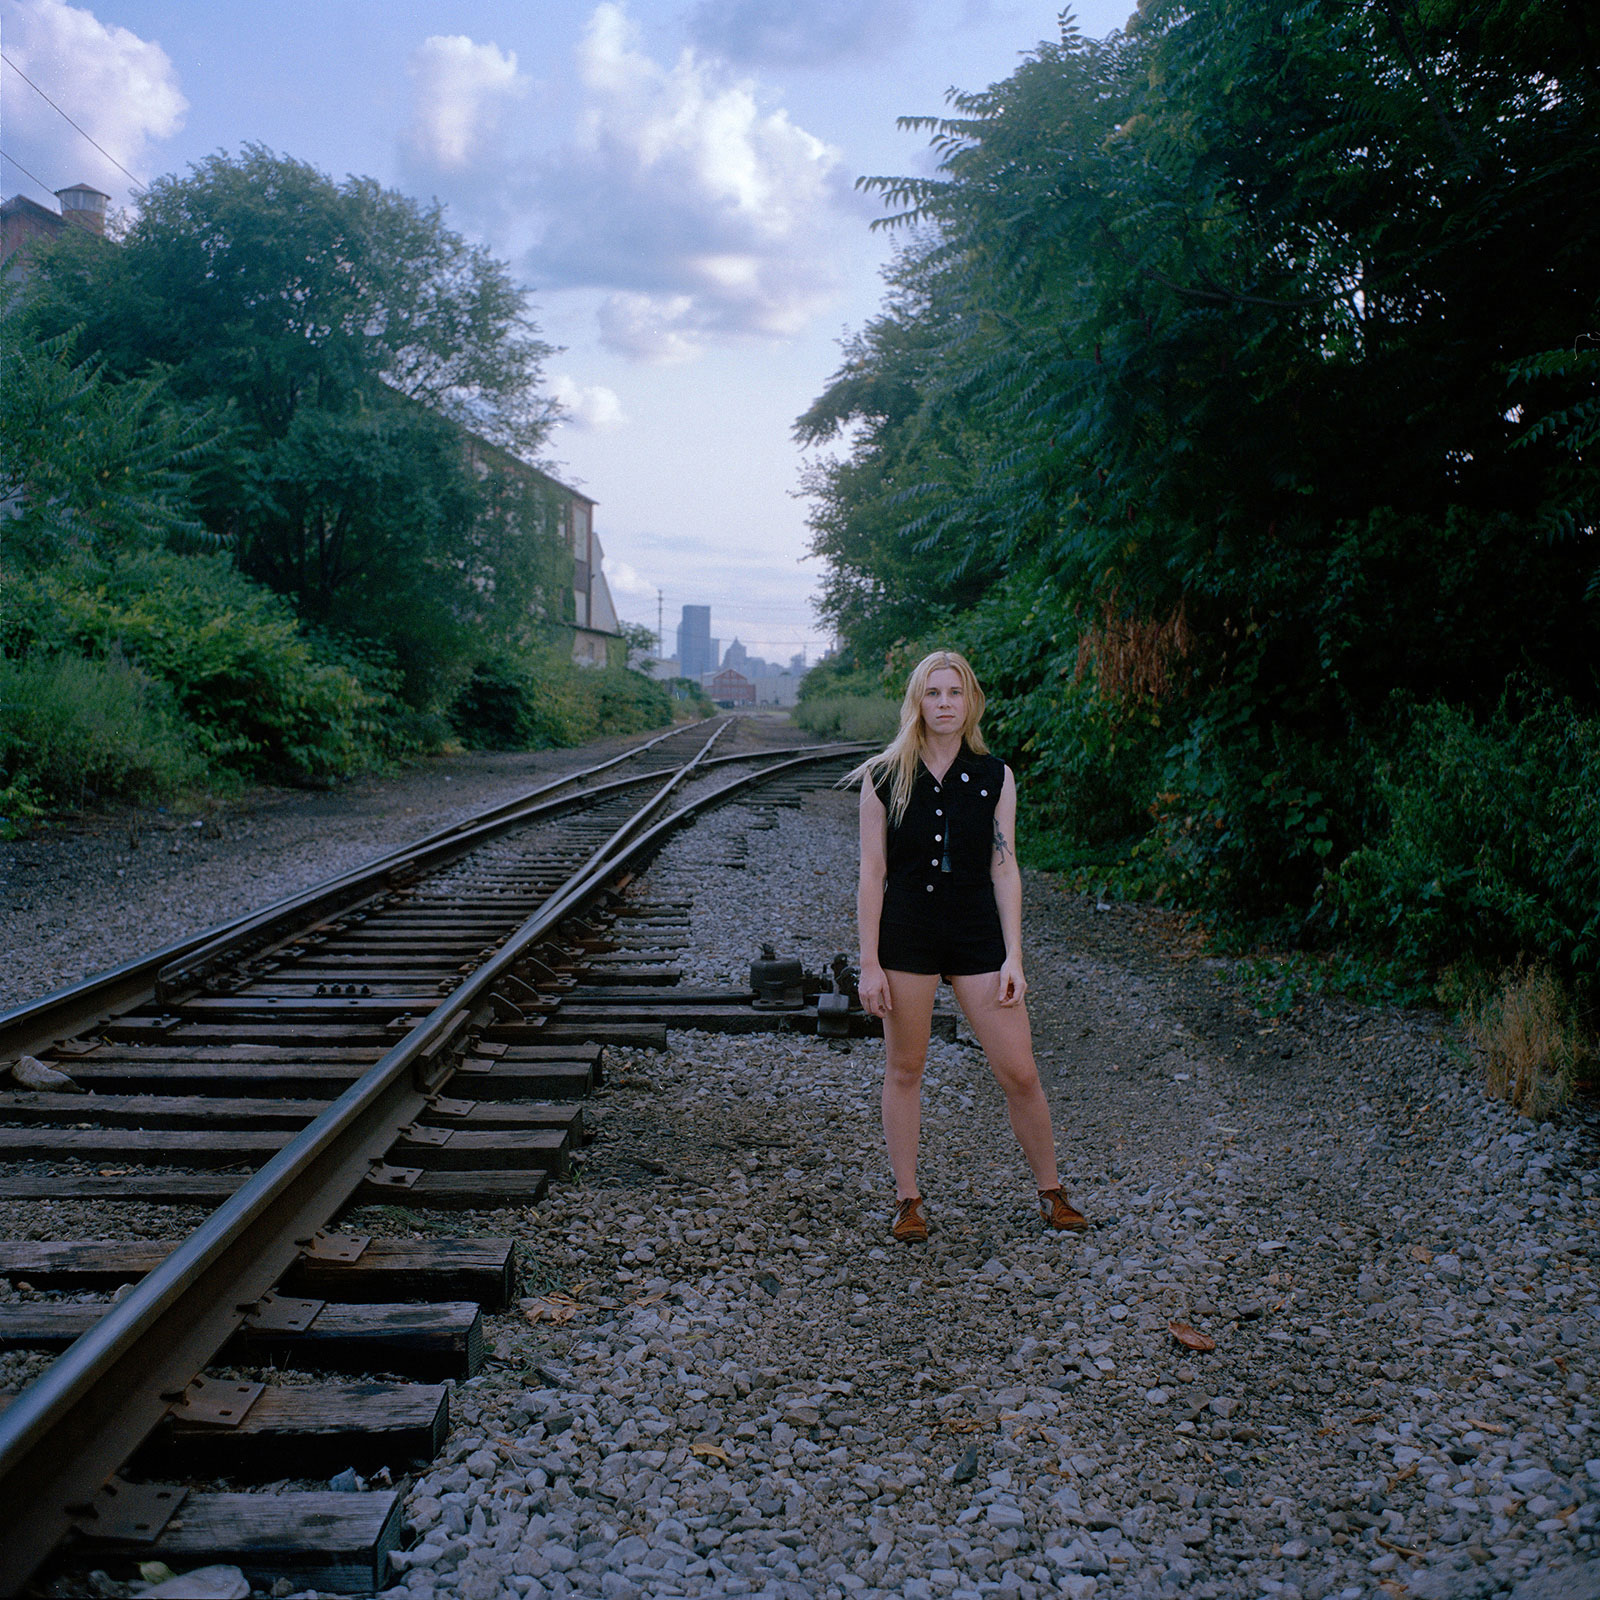 Woman standing next to train tracks